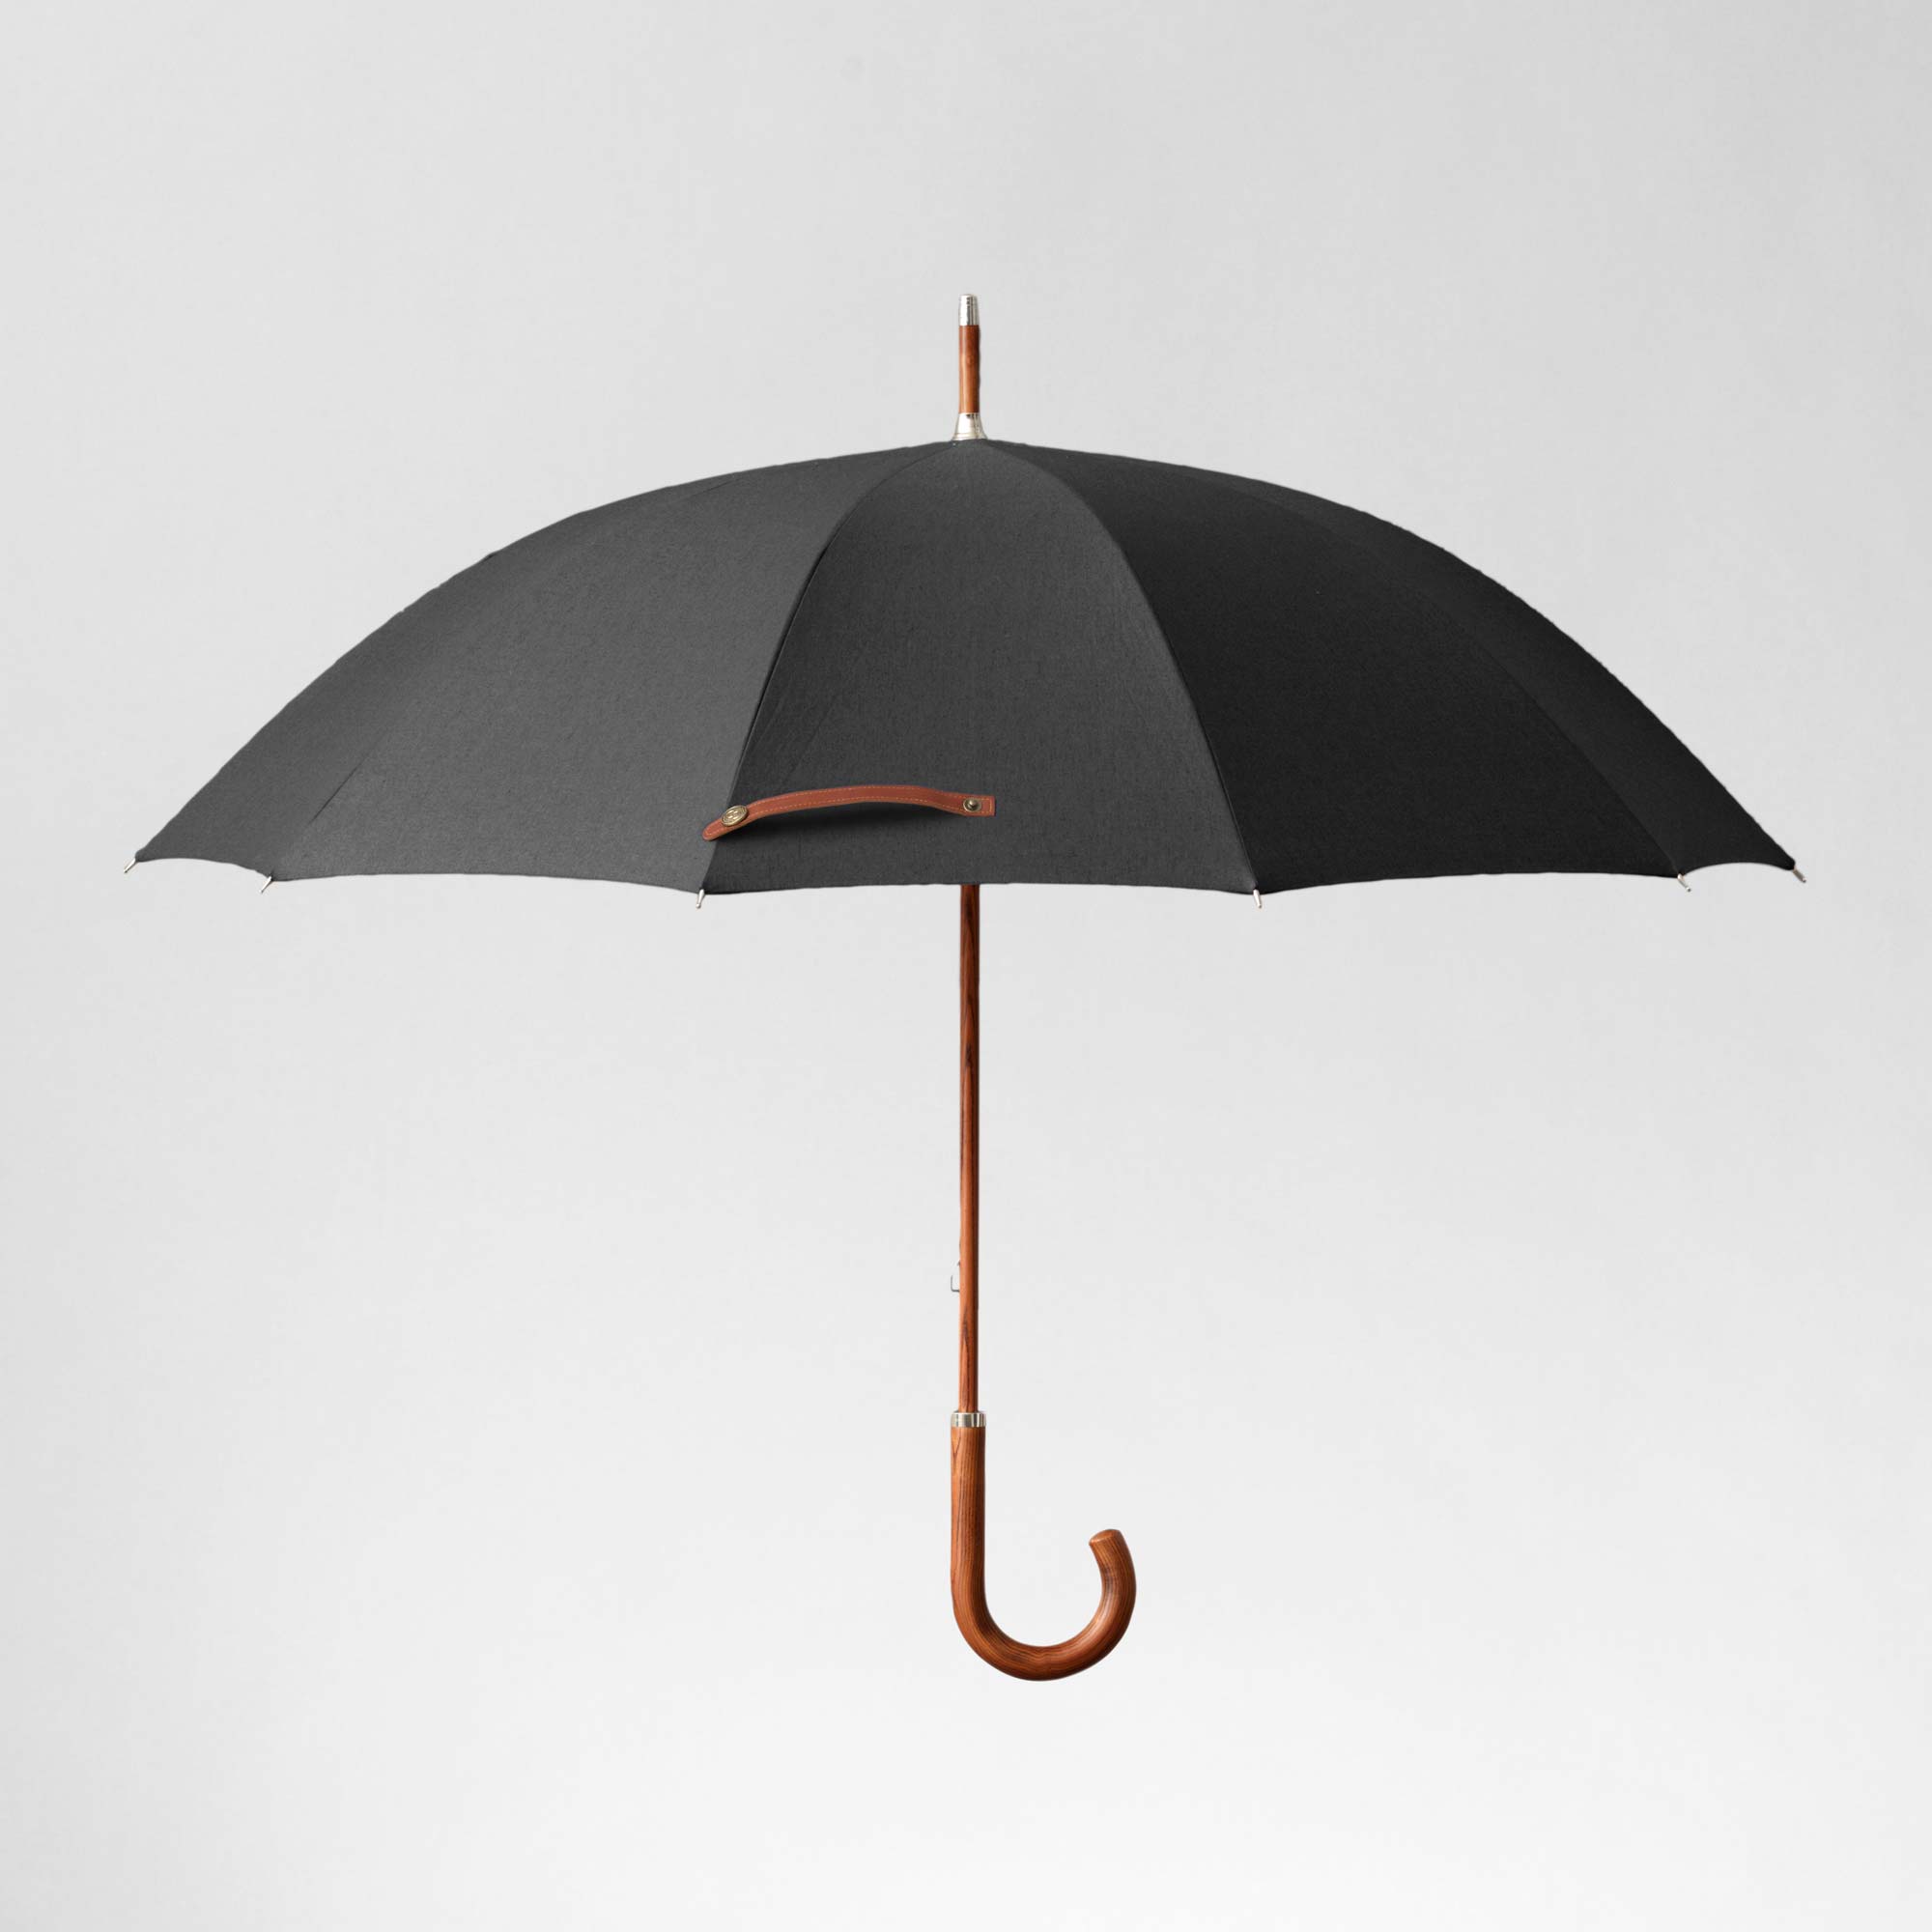 A high quality classic black umbrella